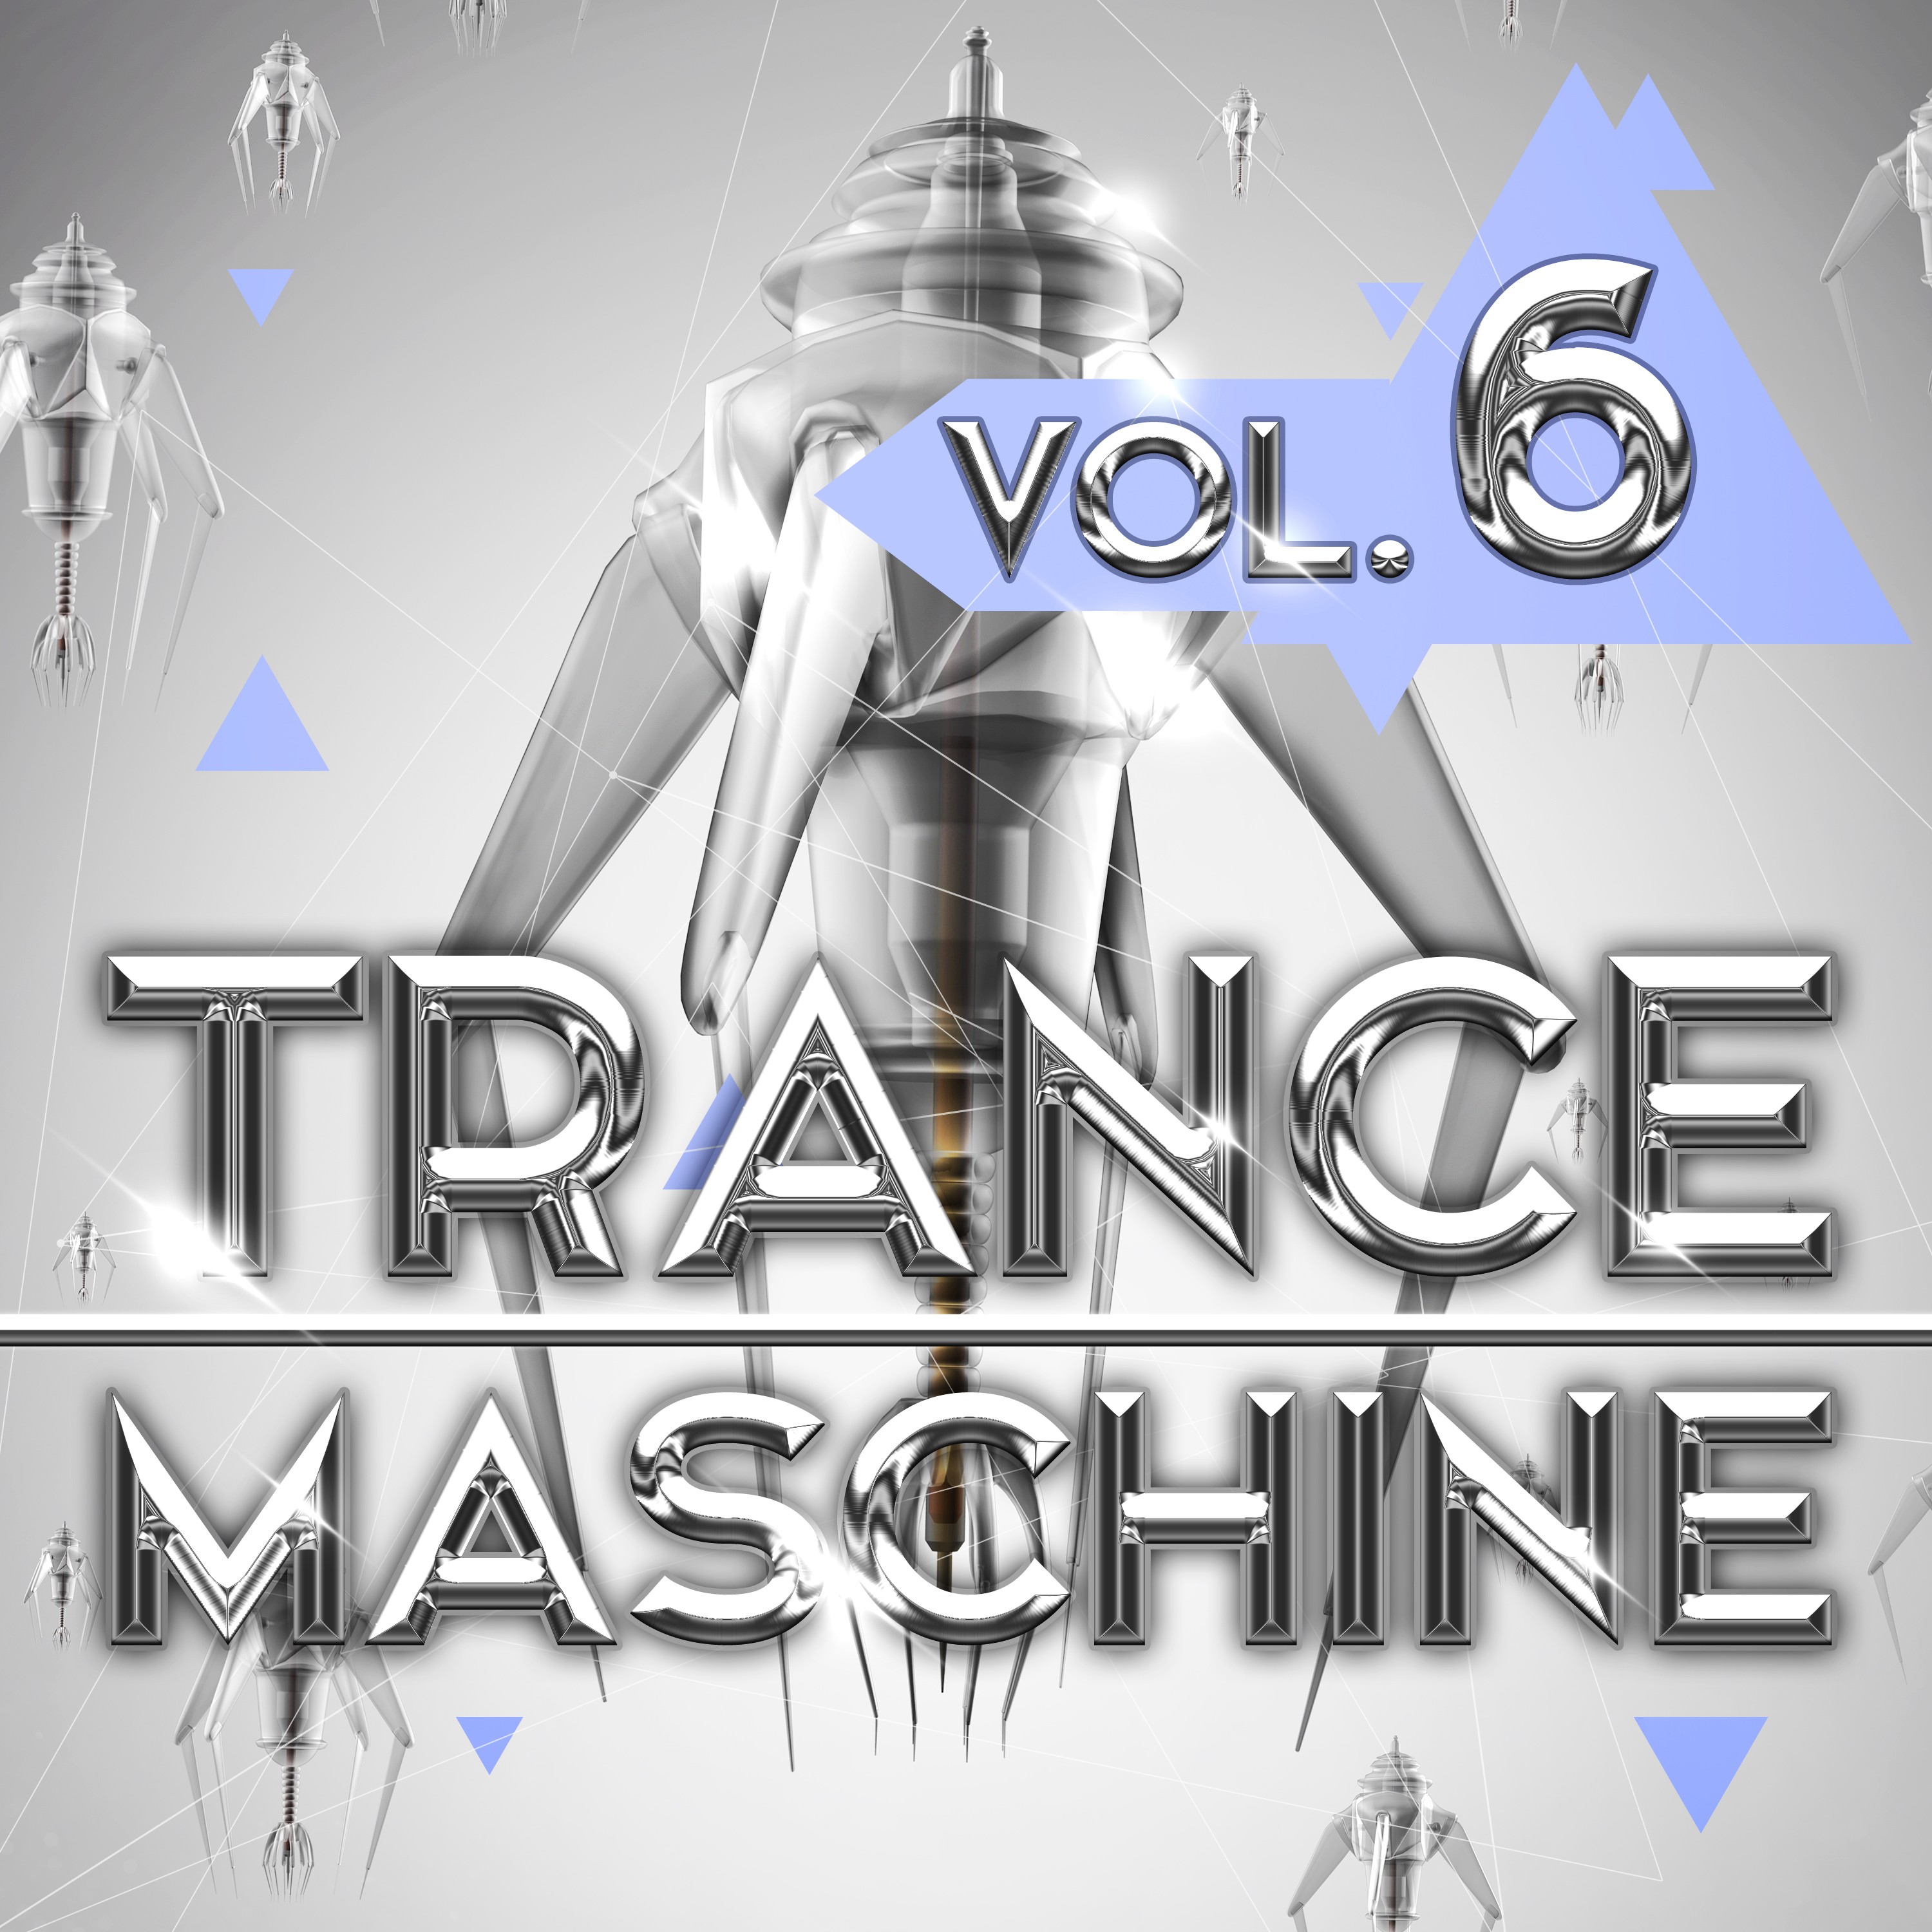 Trance Maschine, Vol. 6